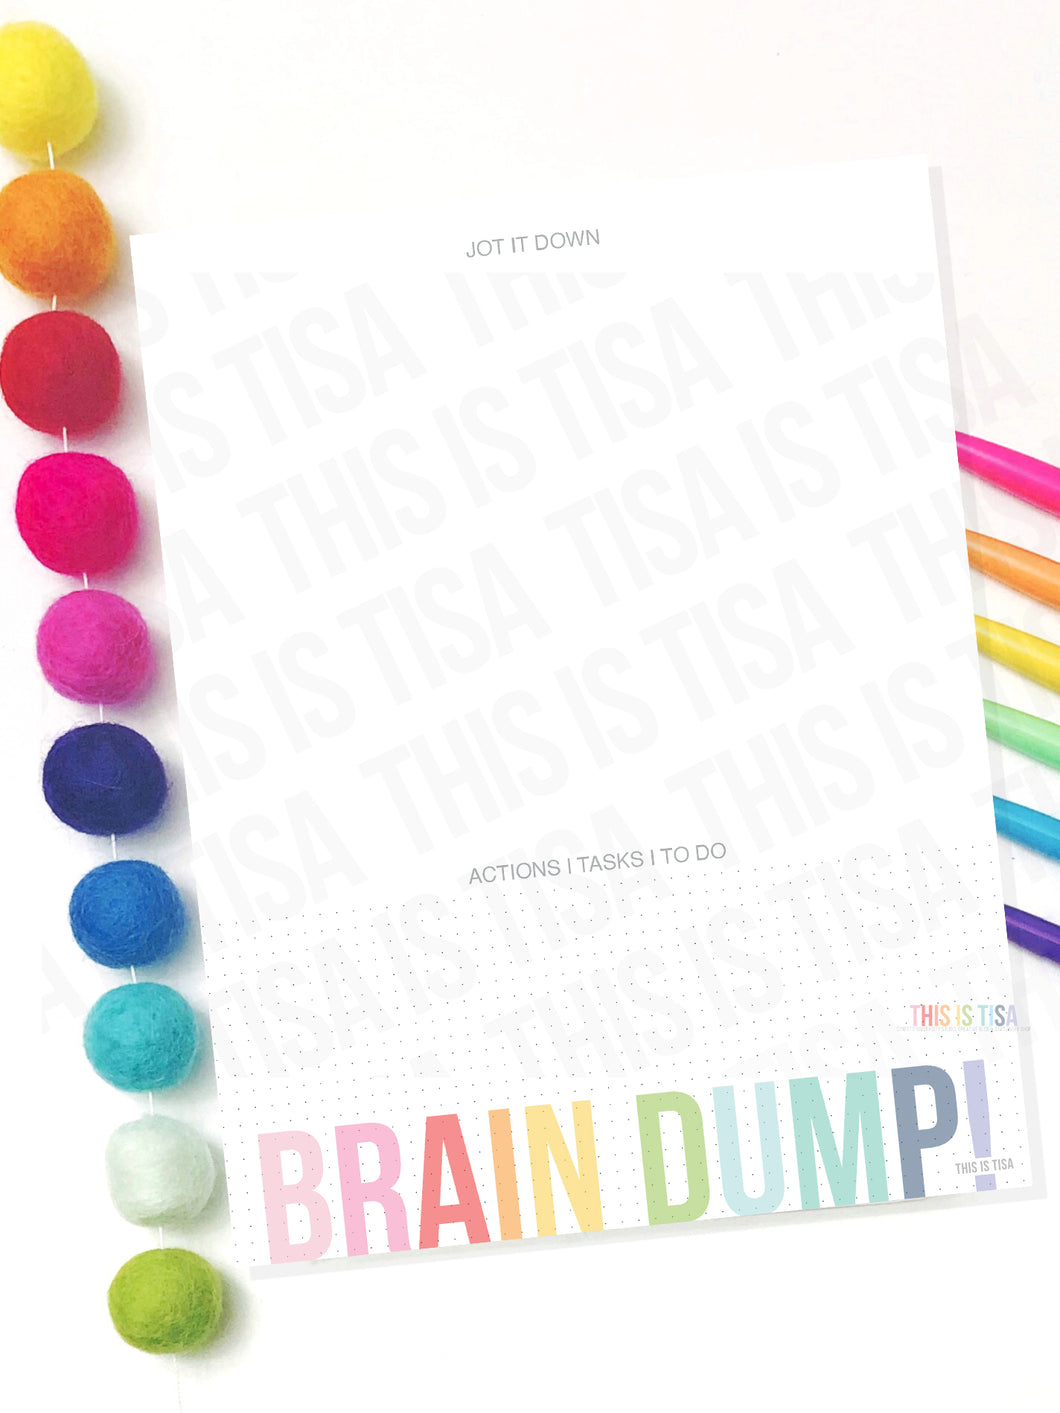 Brain Dump Notepad